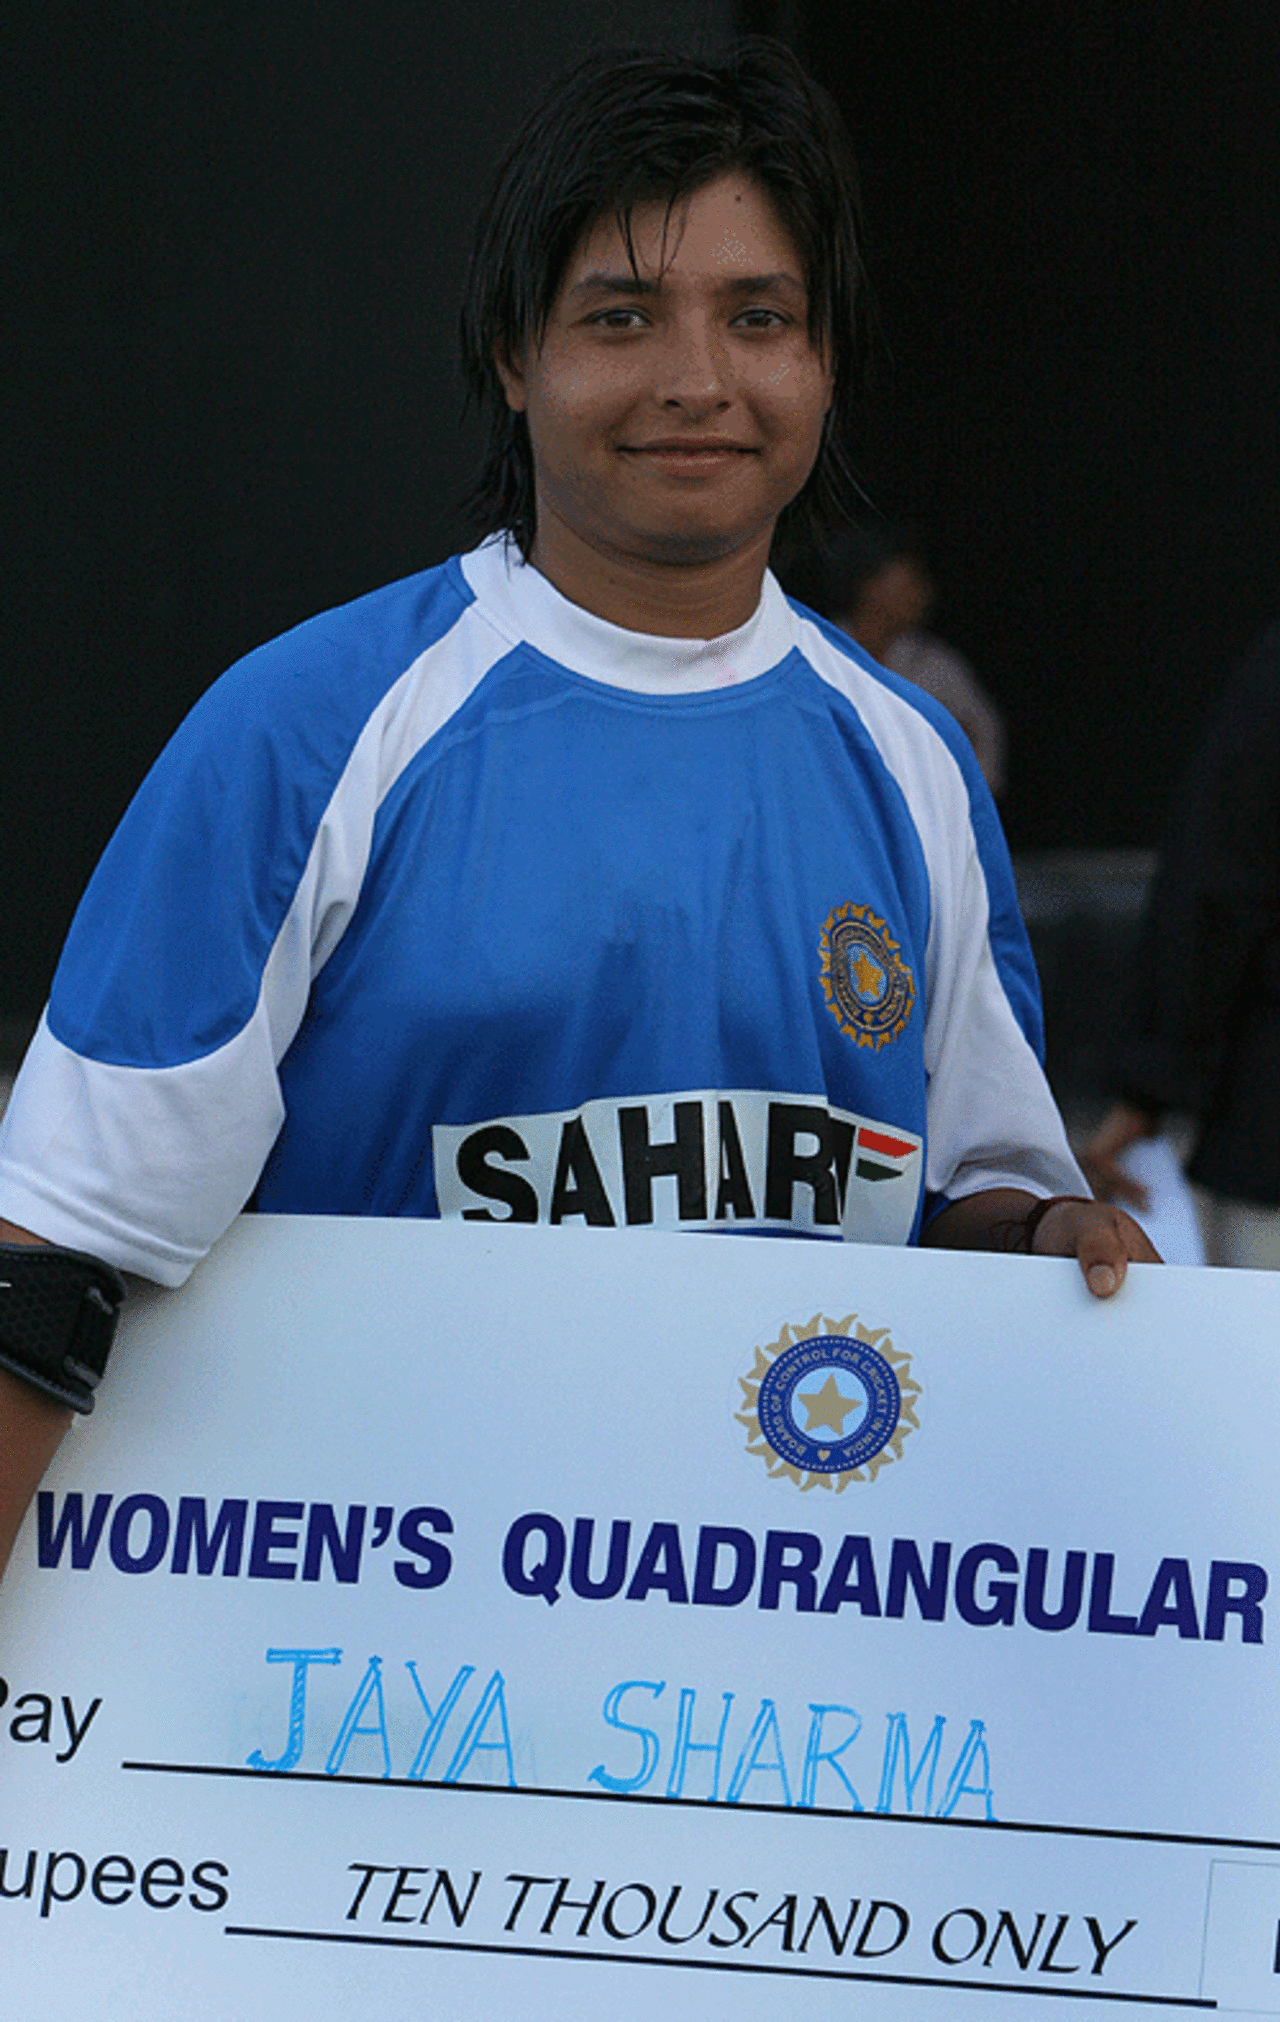 Jaya Sharma, the Indian opener, was the Player of the match against Australia, India v Australia, Women's Quadrangular, Chennai, February 23, 2007